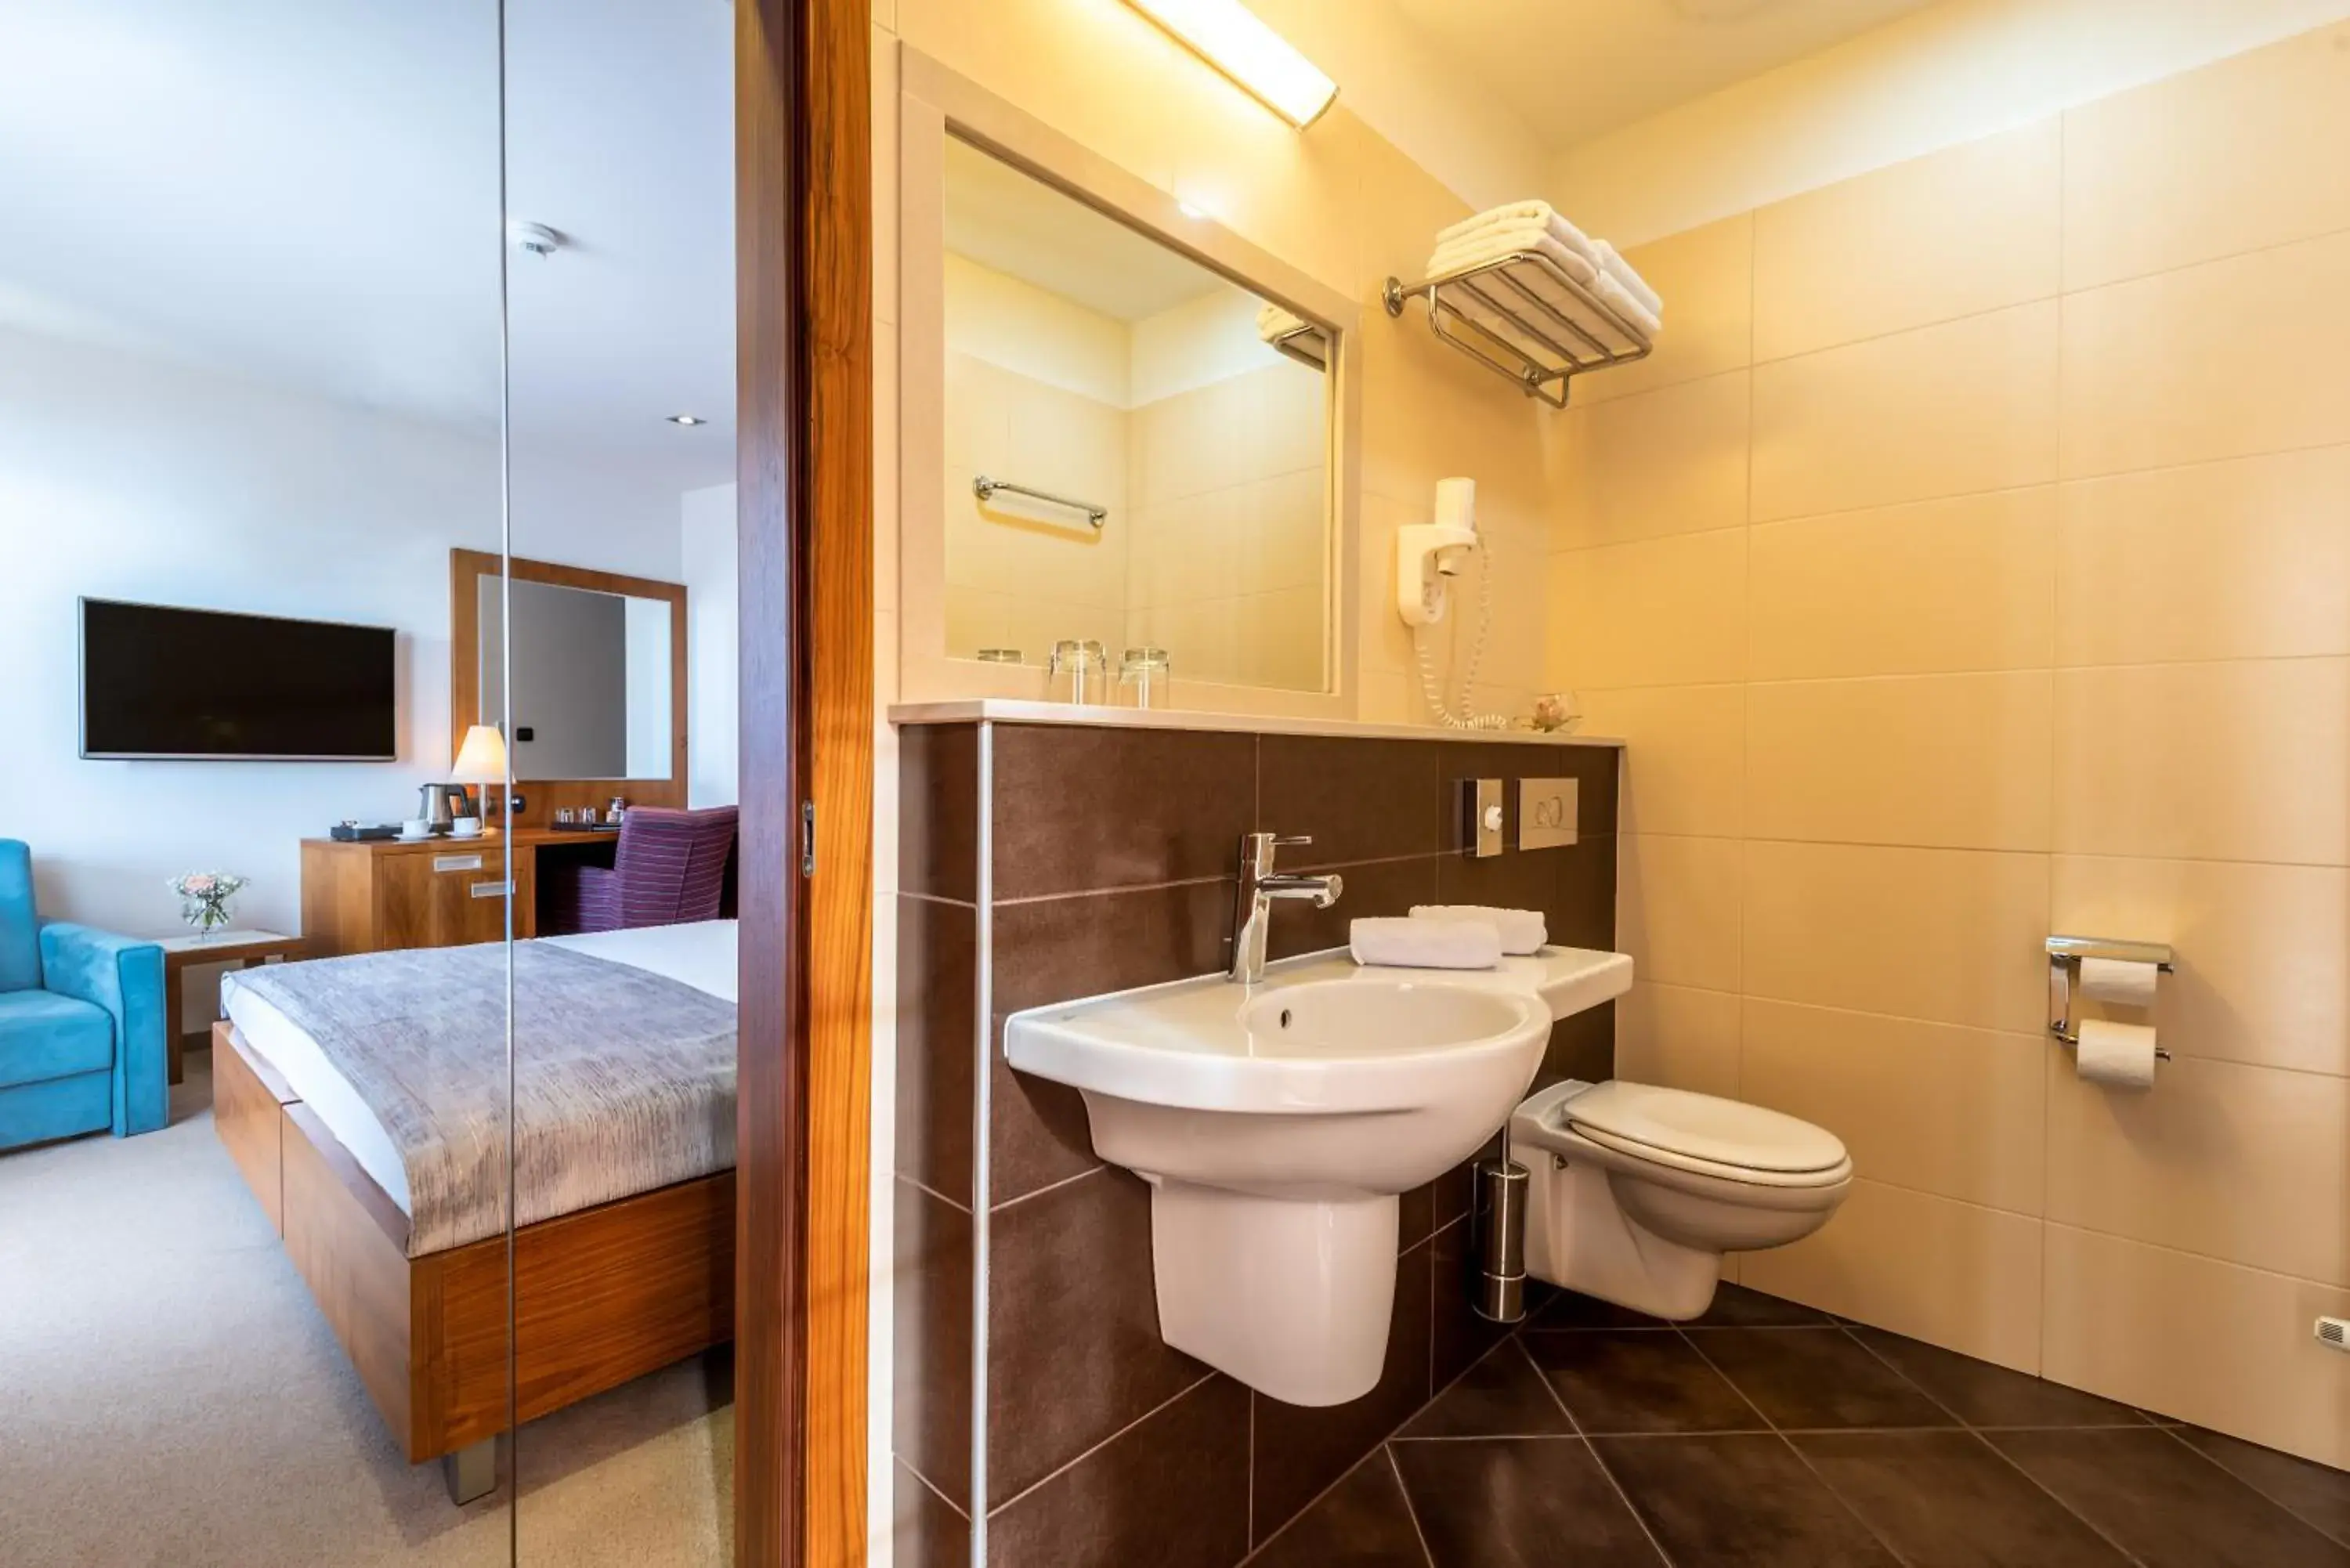 Toilet, Bathroom in Hotel Pla?a